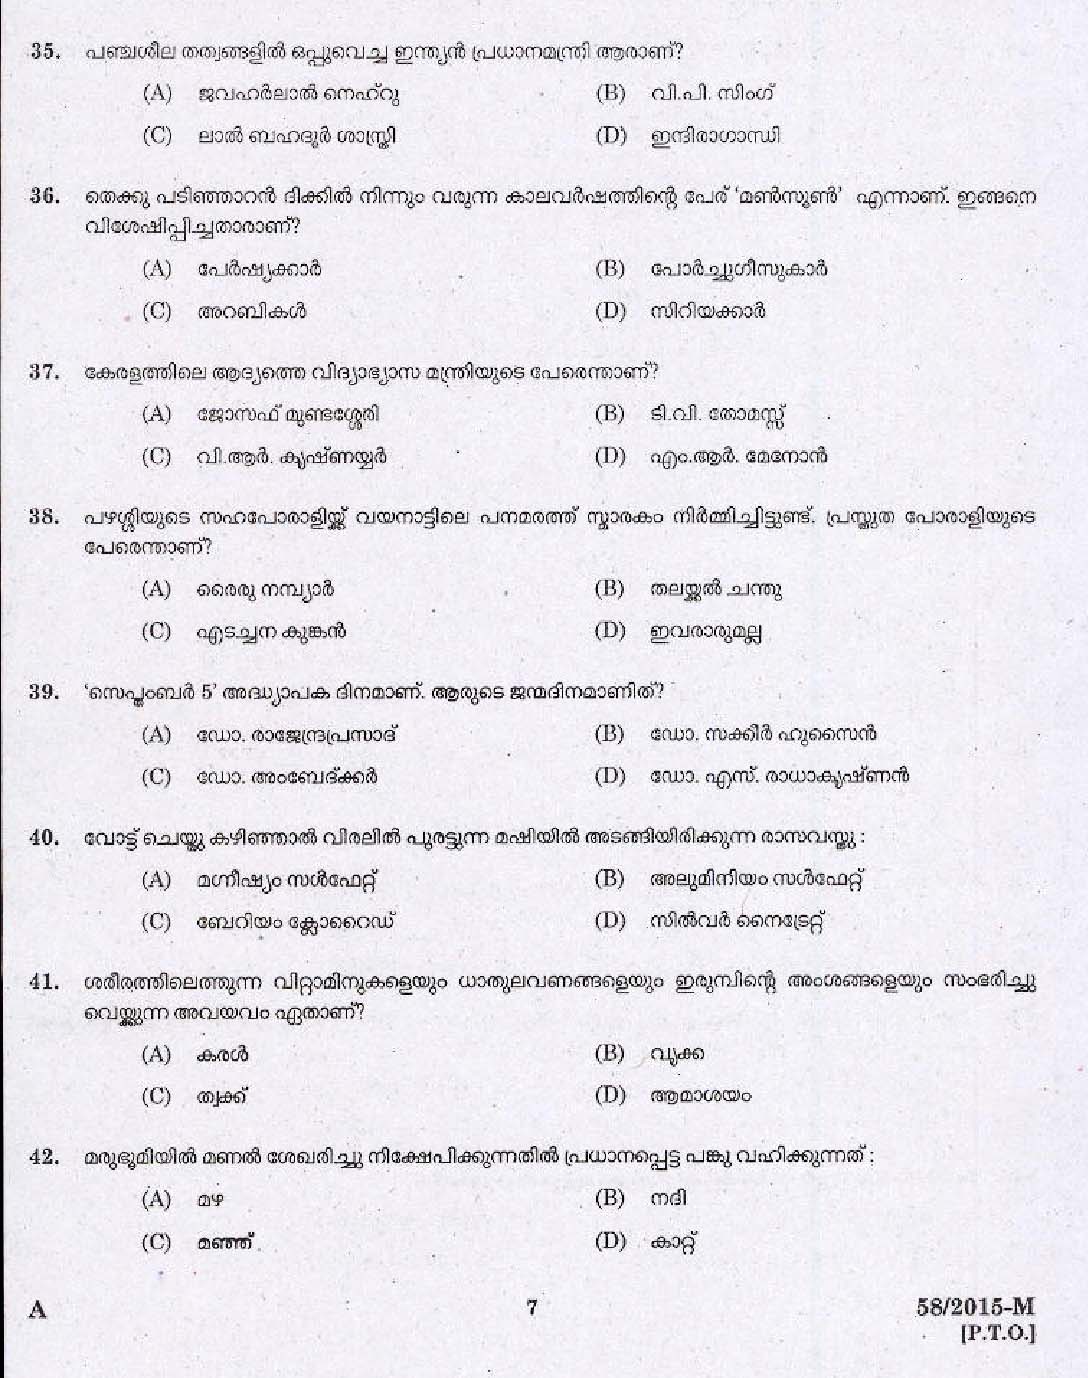 Kerala PSC Attender Exam 2015 Question Paper Code 582015 M 5